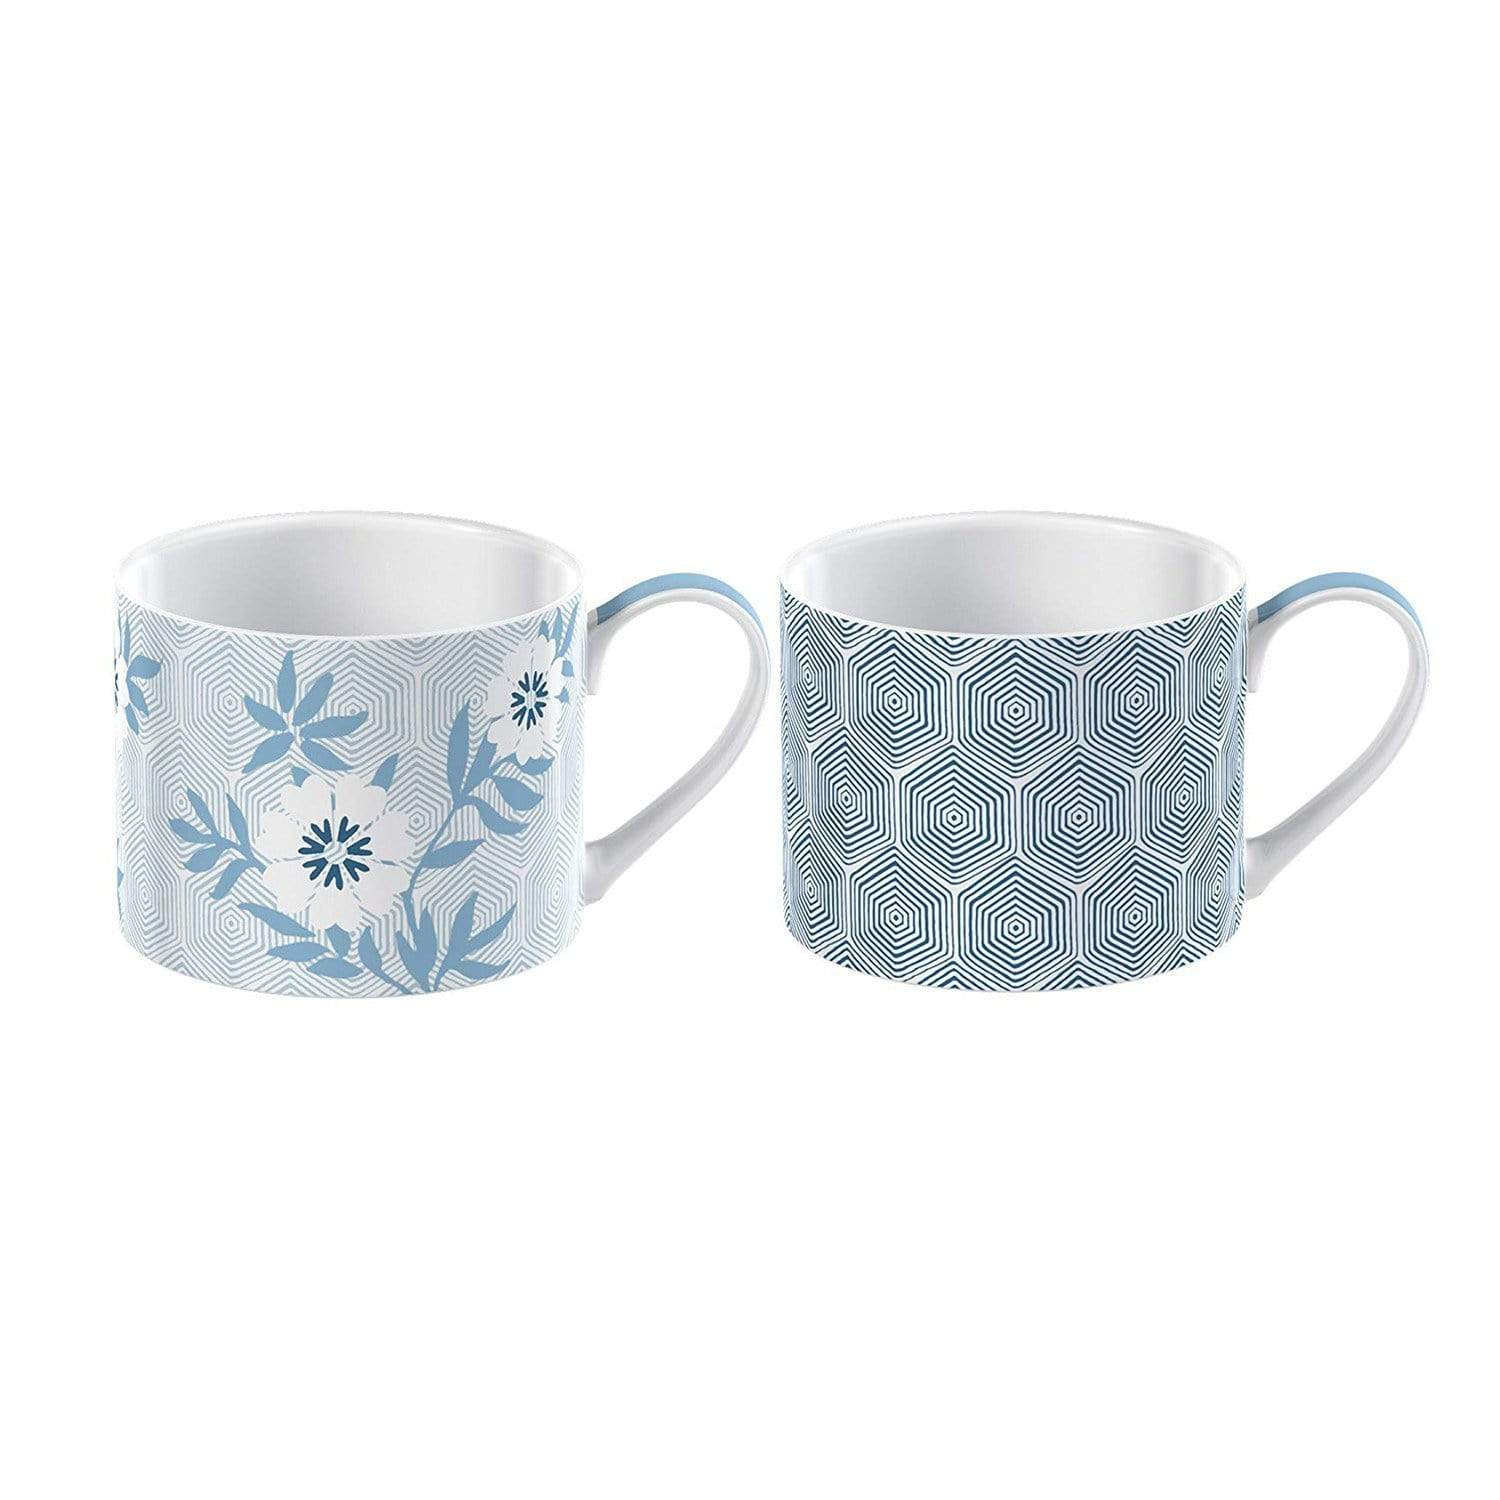 Creative Tops Victoria And Albert Espresso Mug Set -White and Blue, 2 Piece - 5227091 - Jashanmal Home